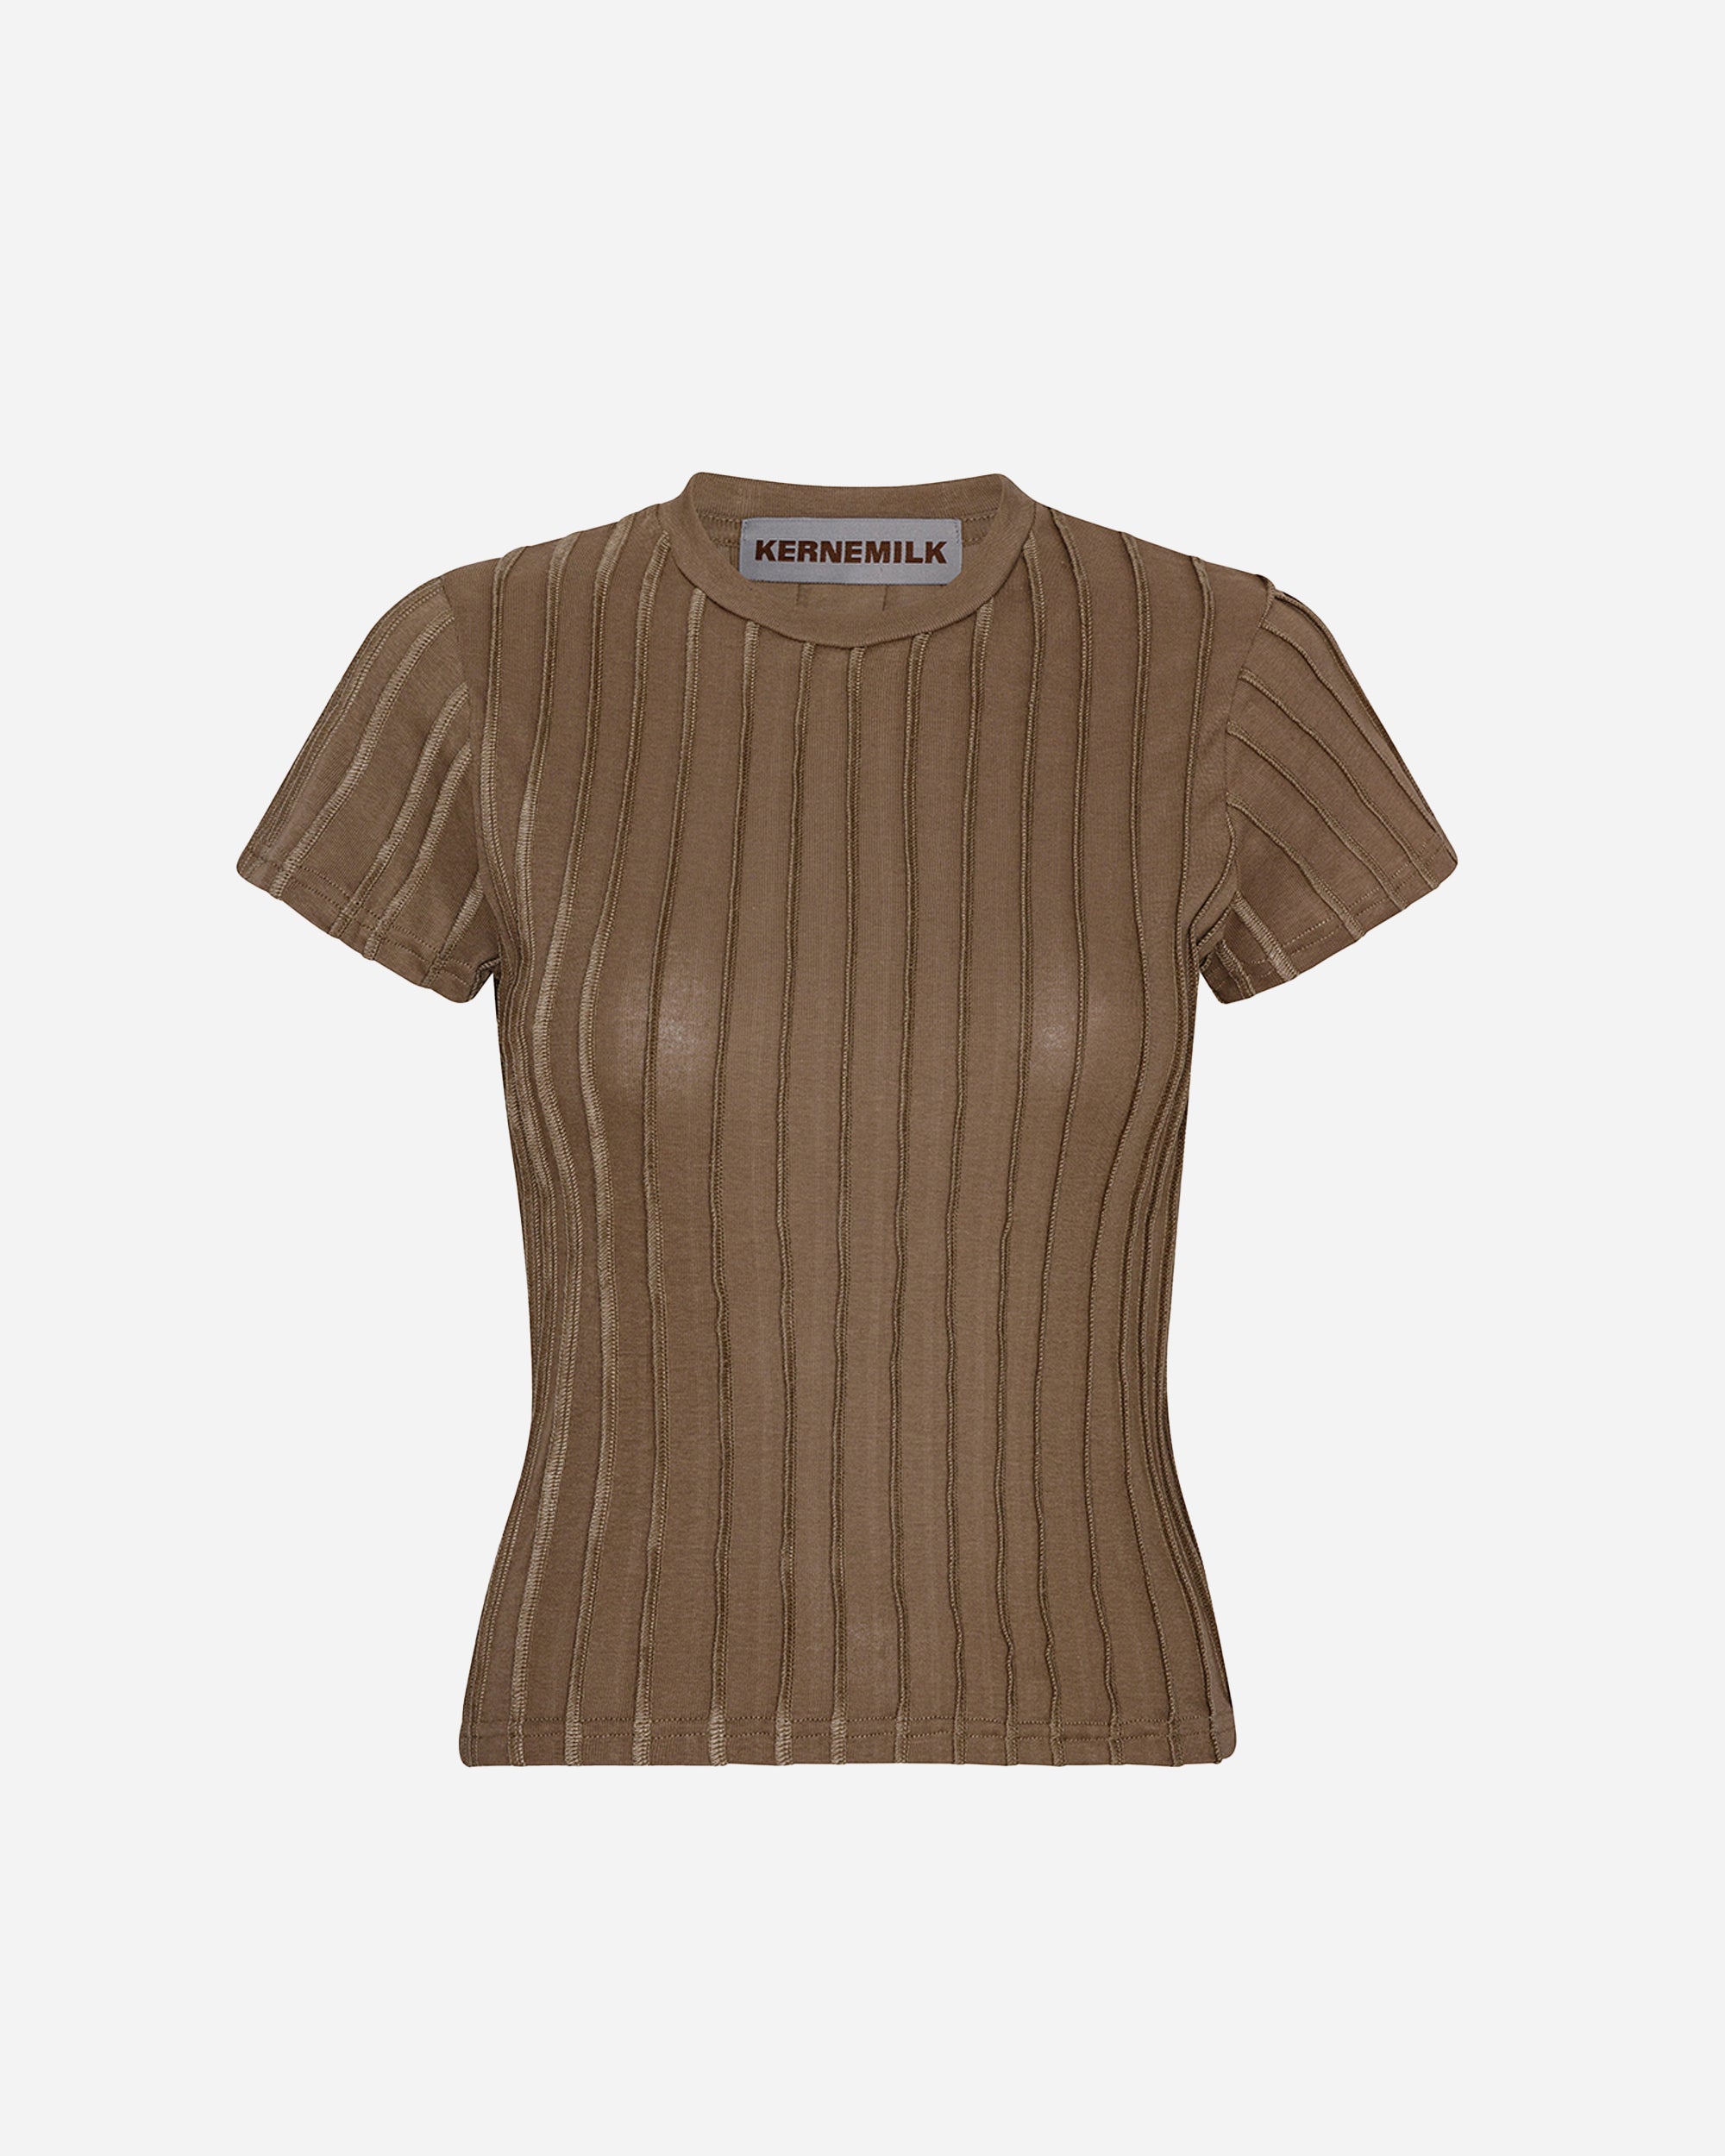 Kernemilk Koko T-shirt Light Brown 8050-6543-0004